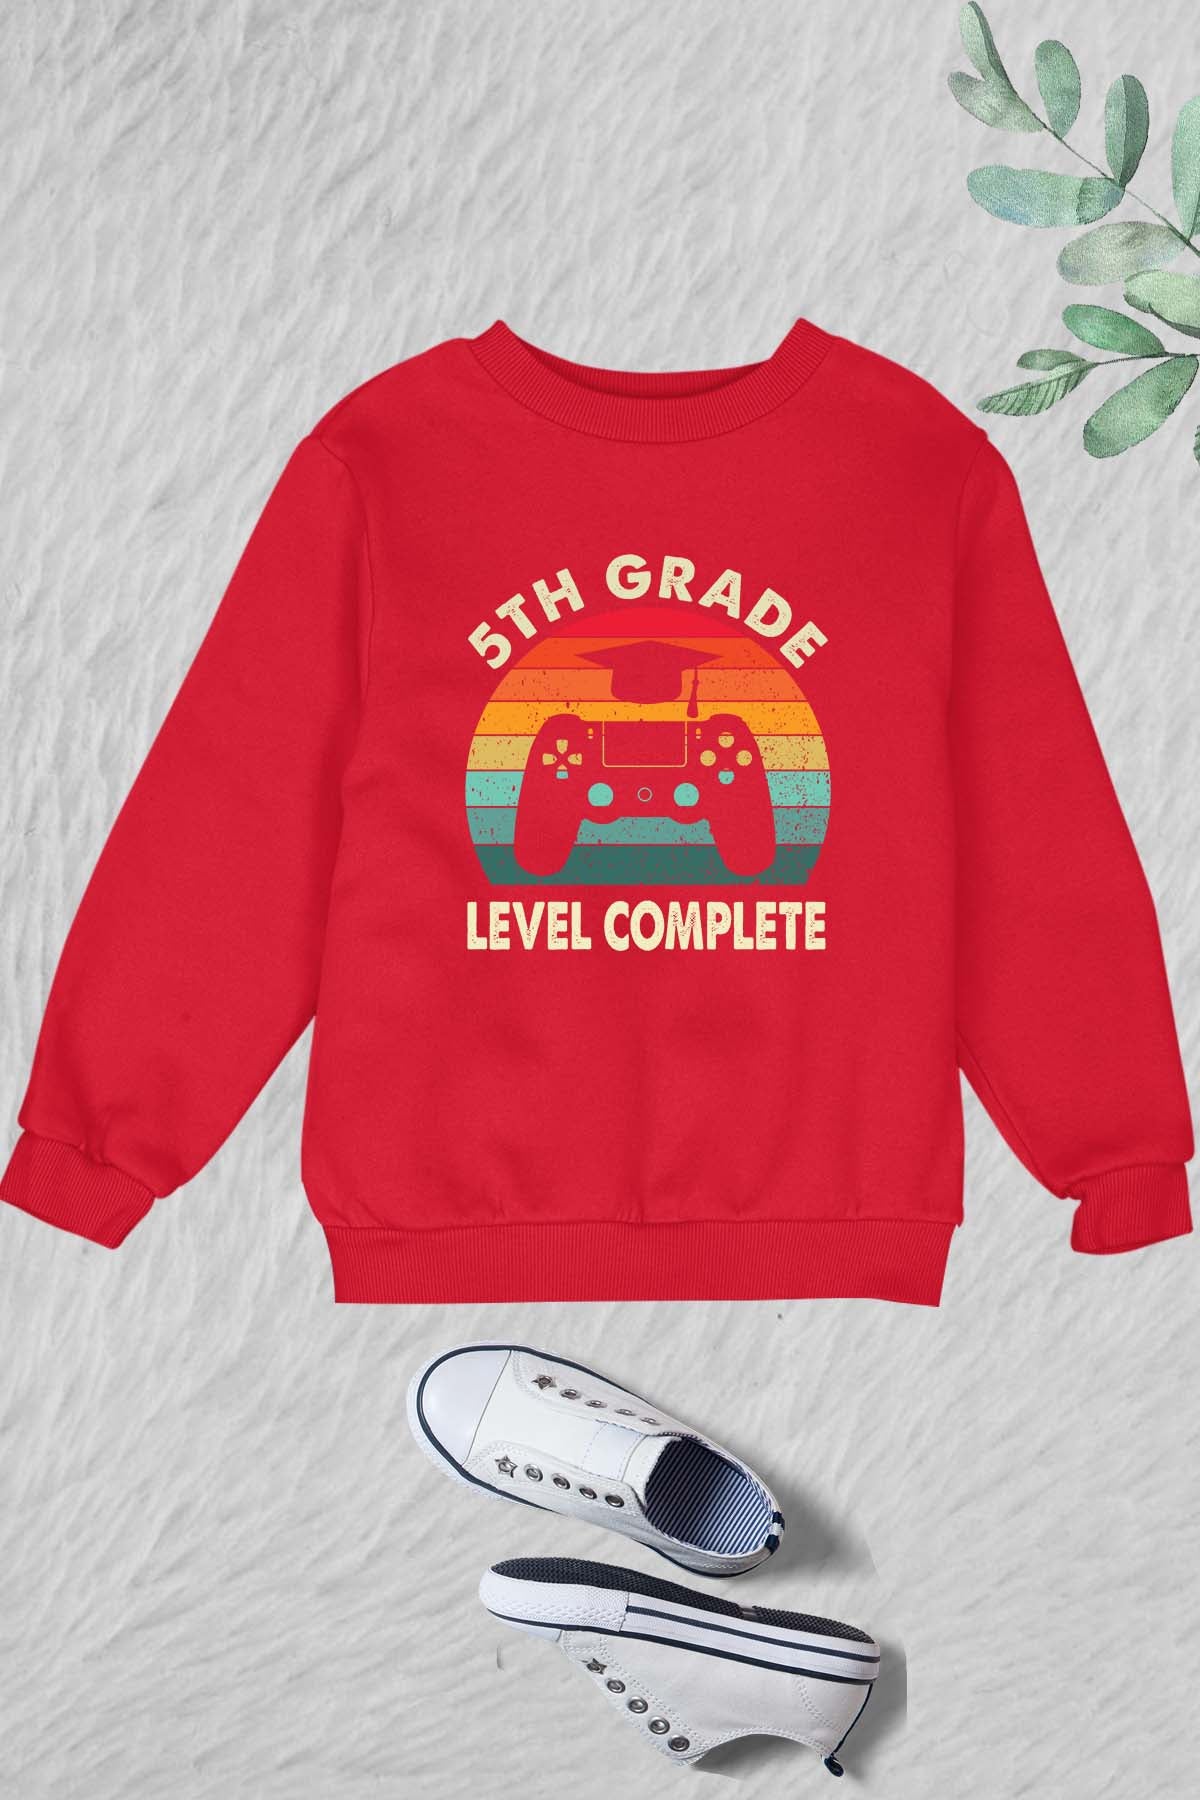 5th Grade Level Complete Funny Kids Sweatshirt